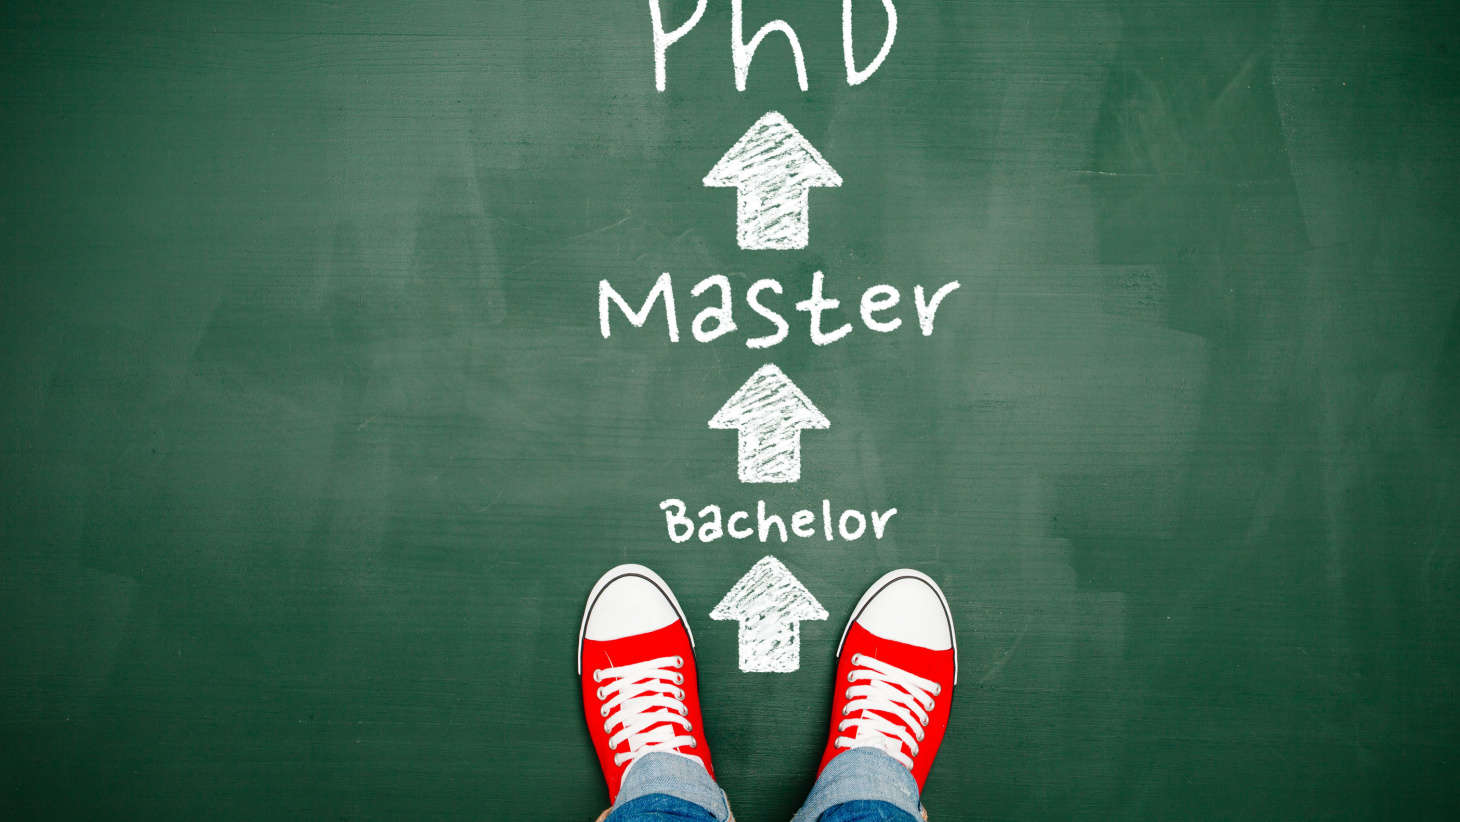 Masters-VS-Ph.D.